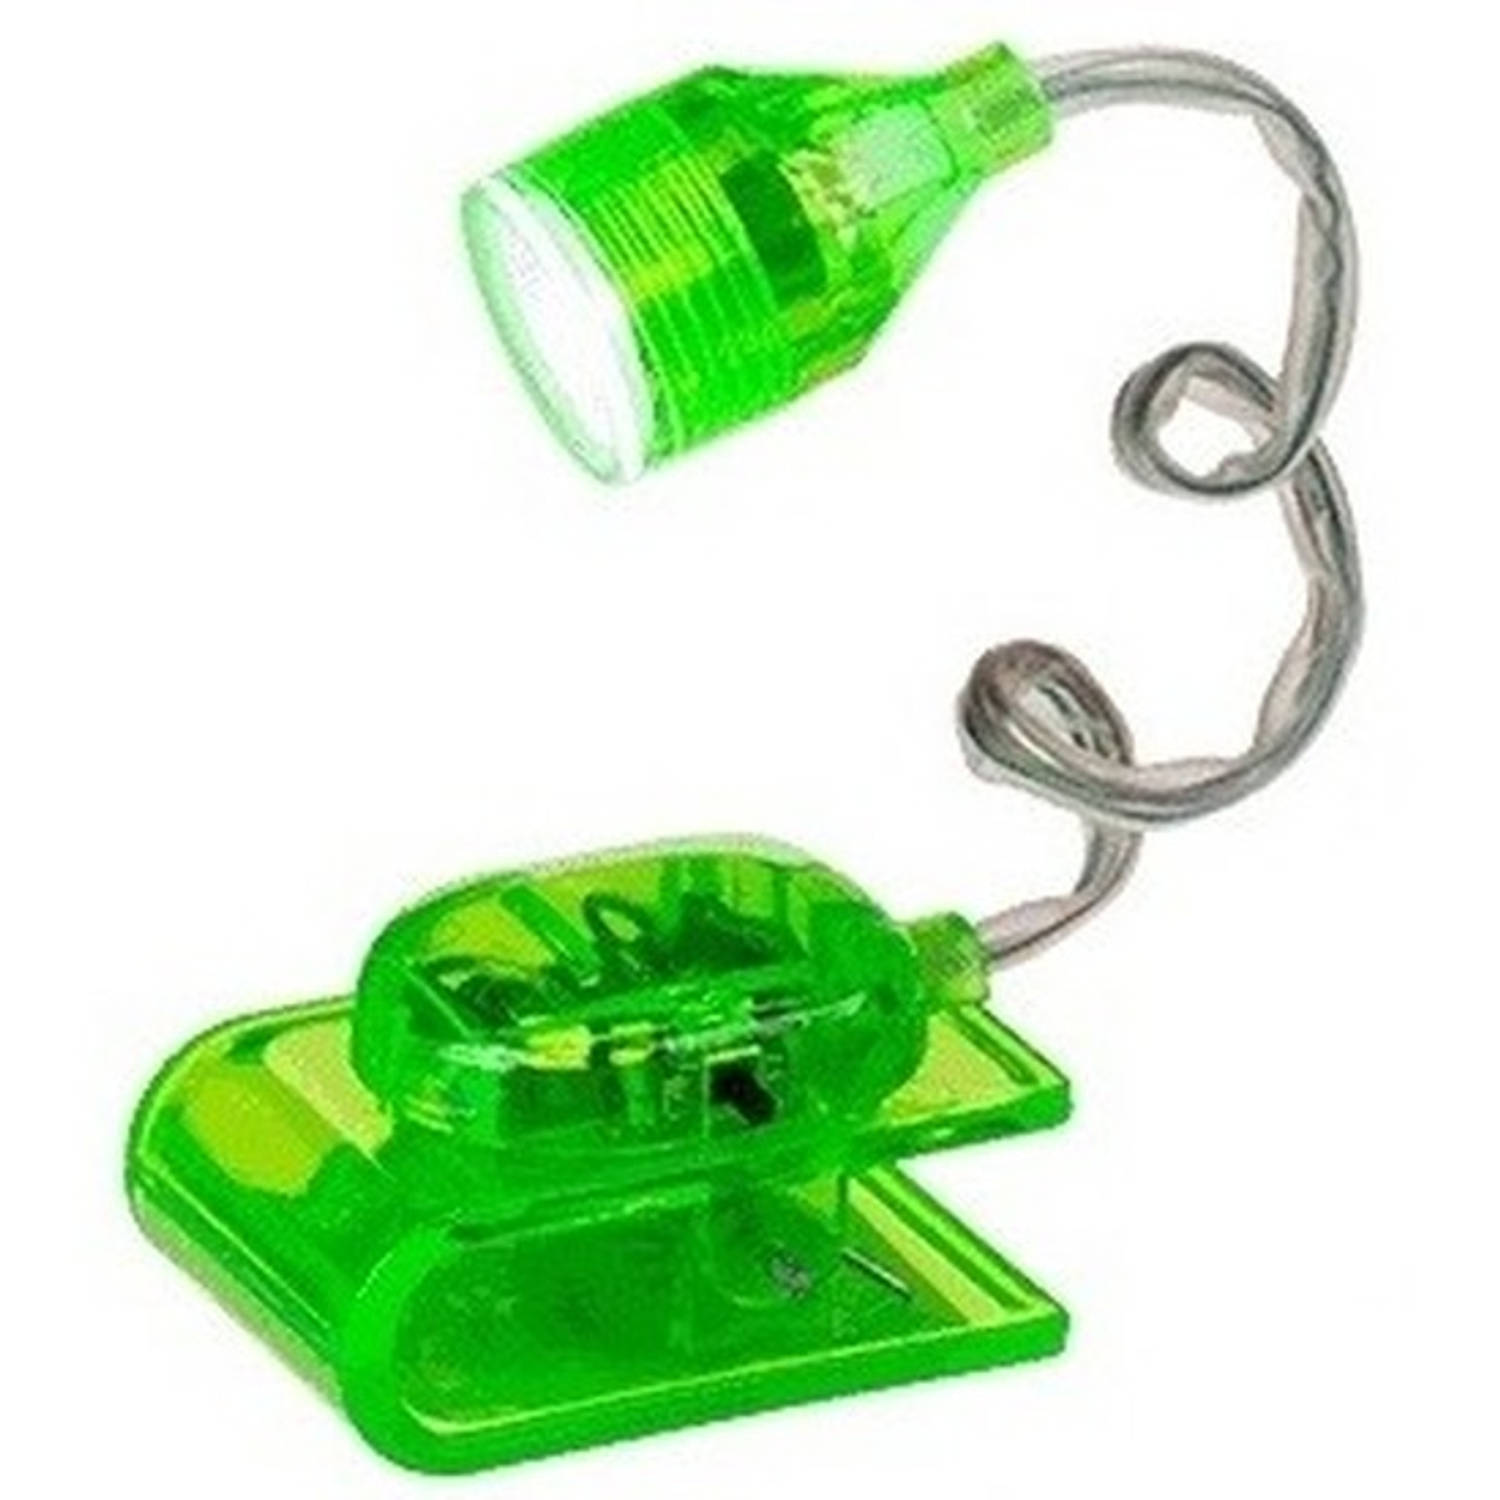 Raar voordeel aanvulling Groen leeslampje op klem 4 cm - Klemlampen | Blokker